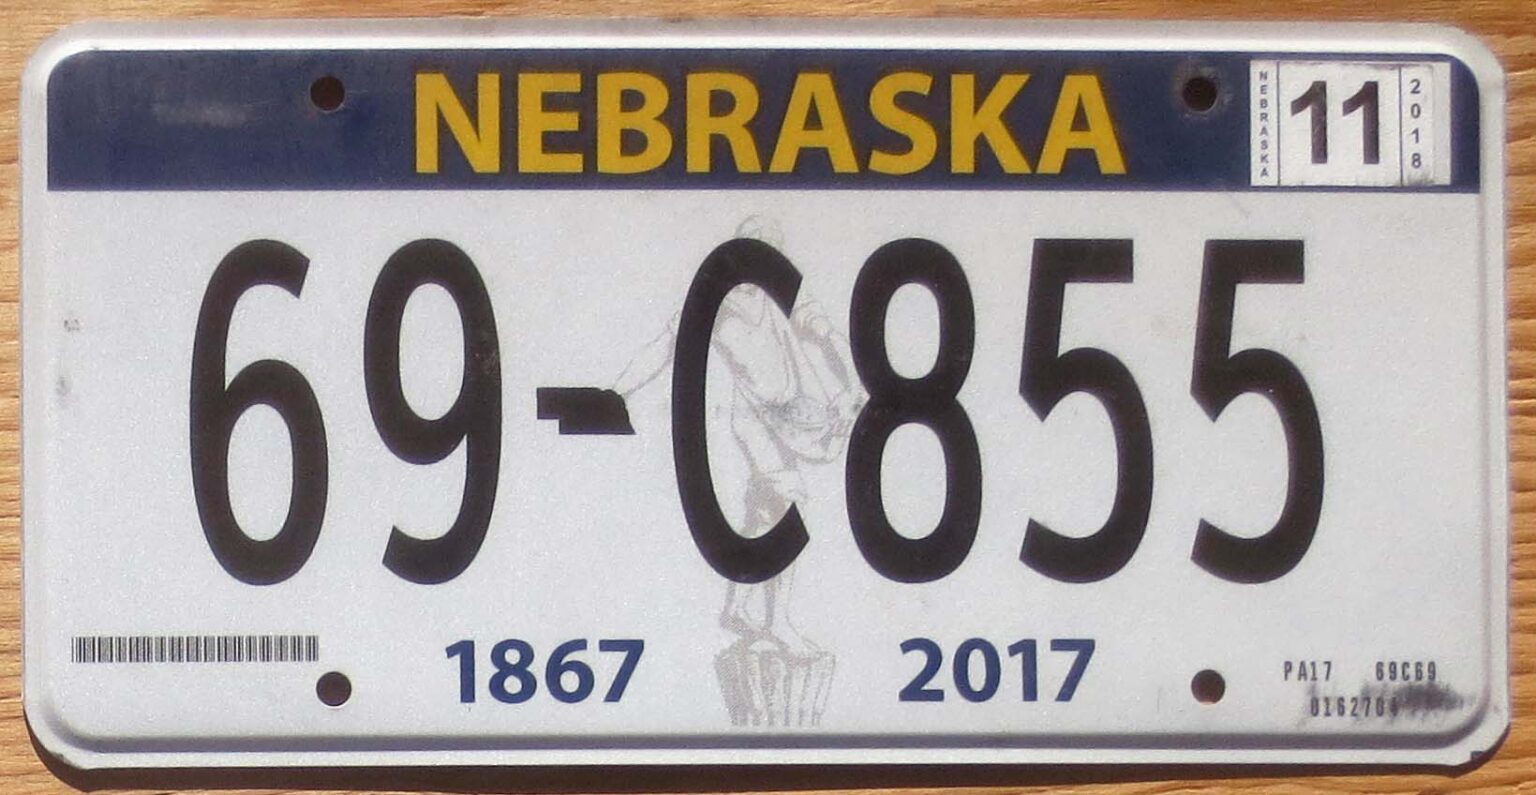 Nebraska Product categories Automobile License Plate Store